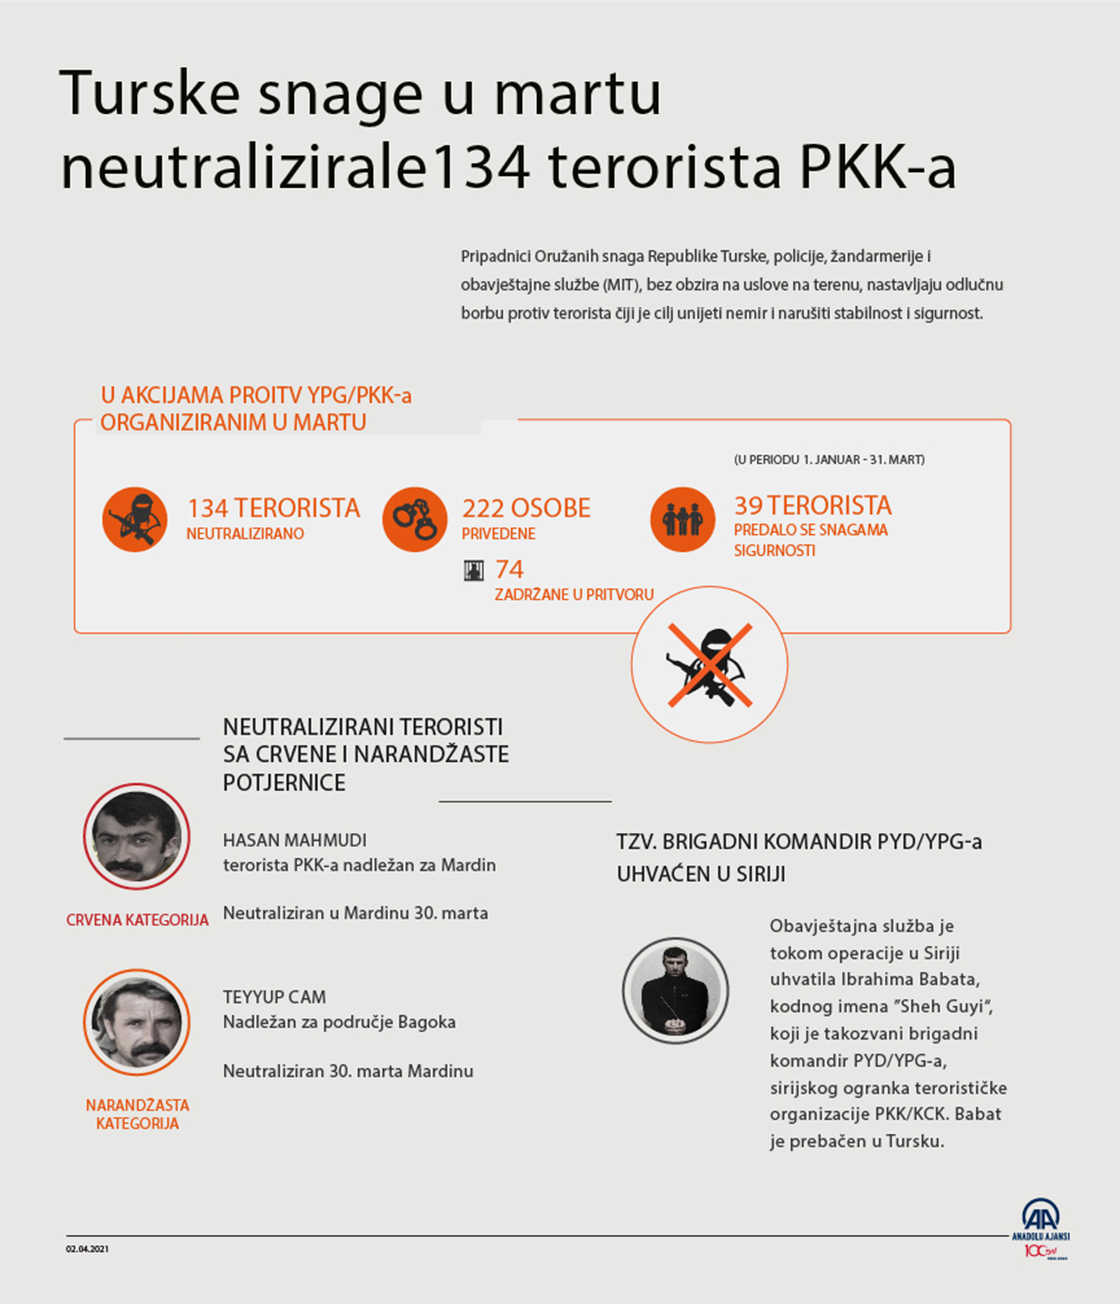 Turske snage u martu neutralizirale 134 terorista PKK-a